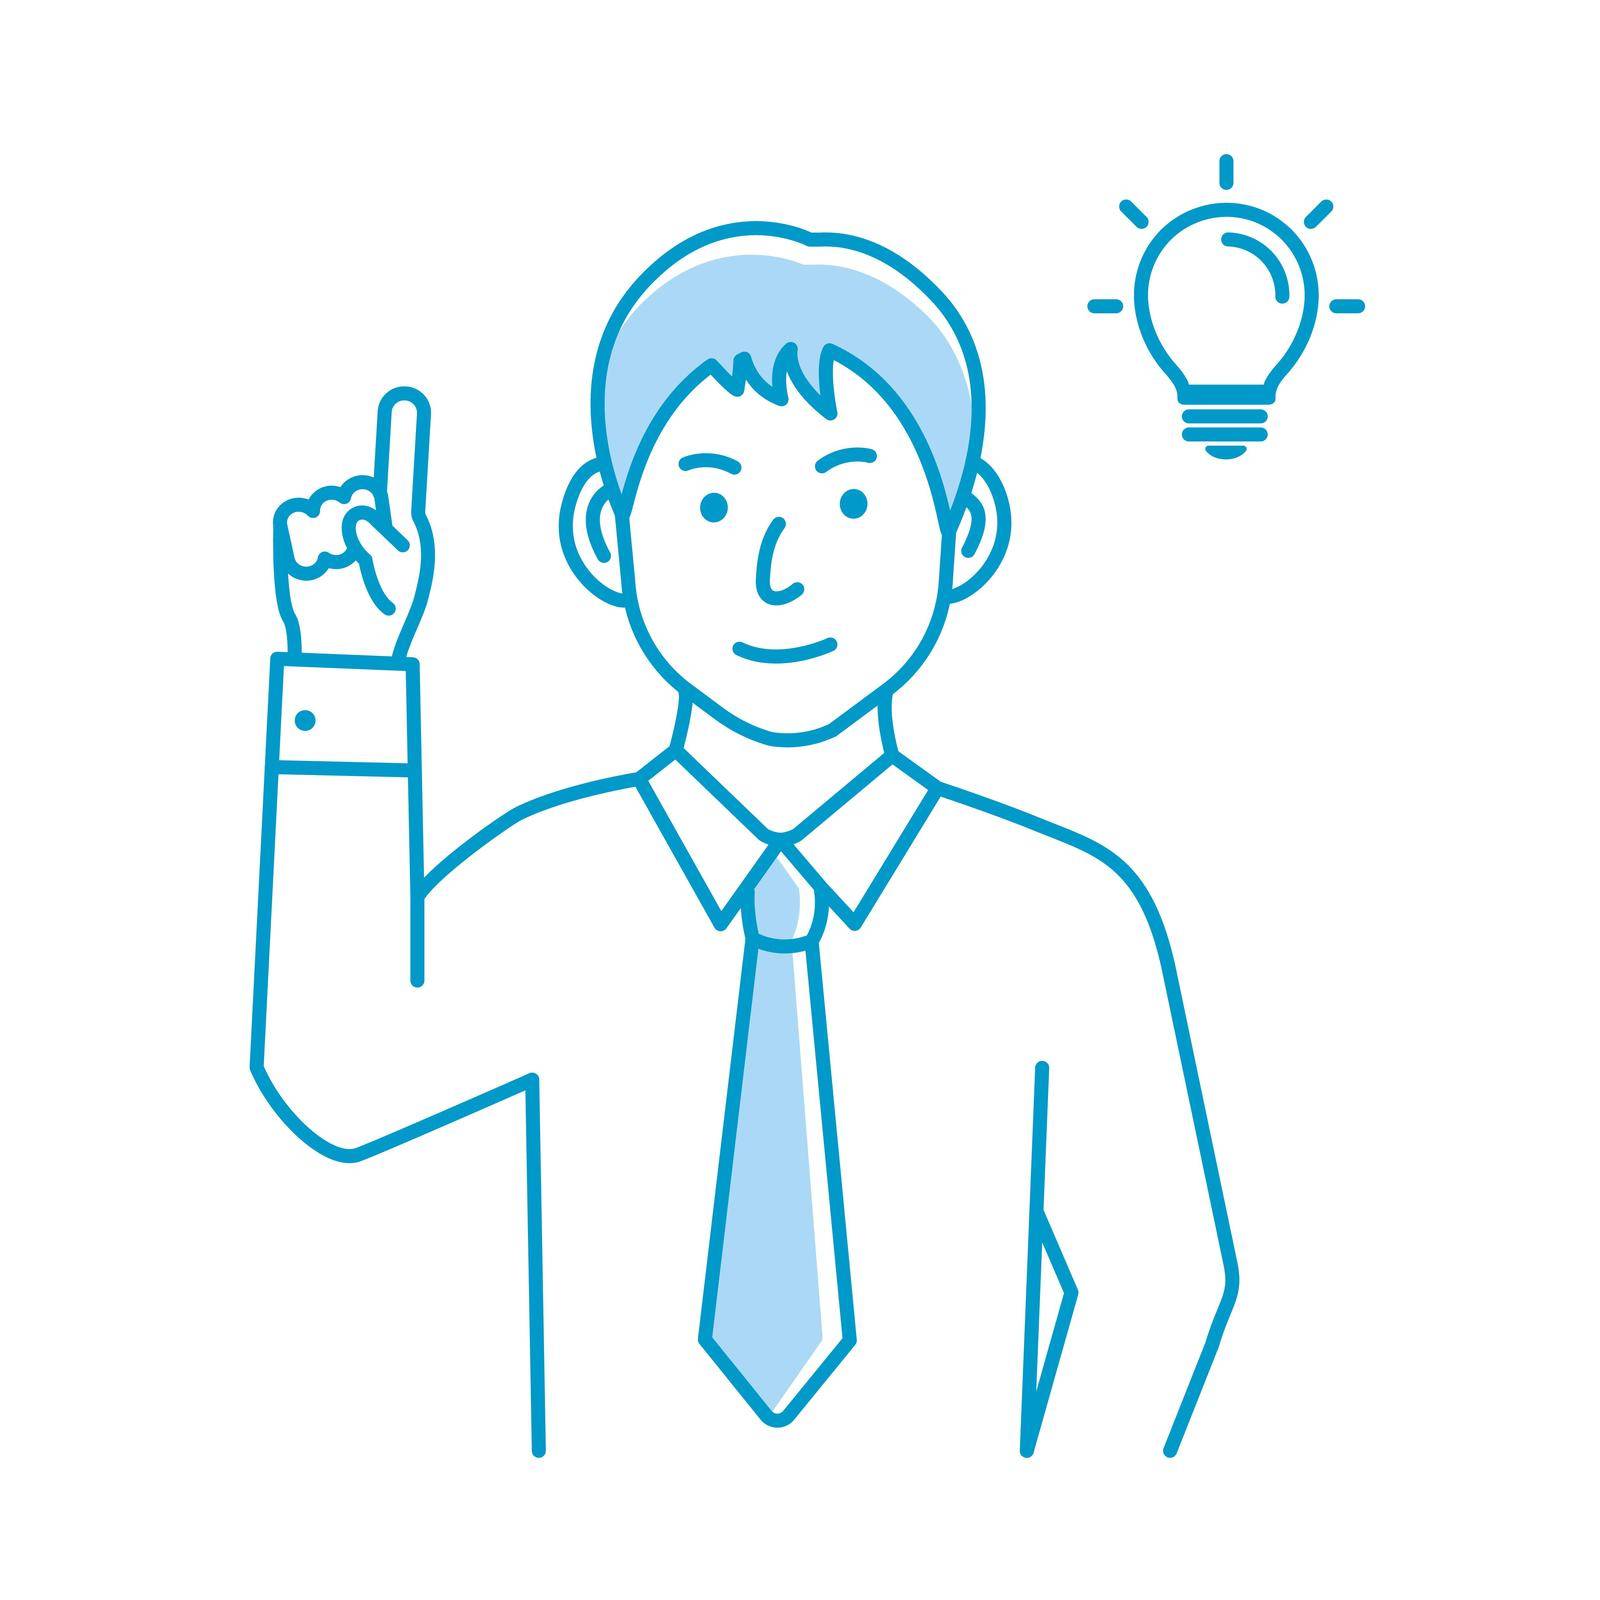 Vector illustration of a young businessman having good idea ( inspiration, innovation )